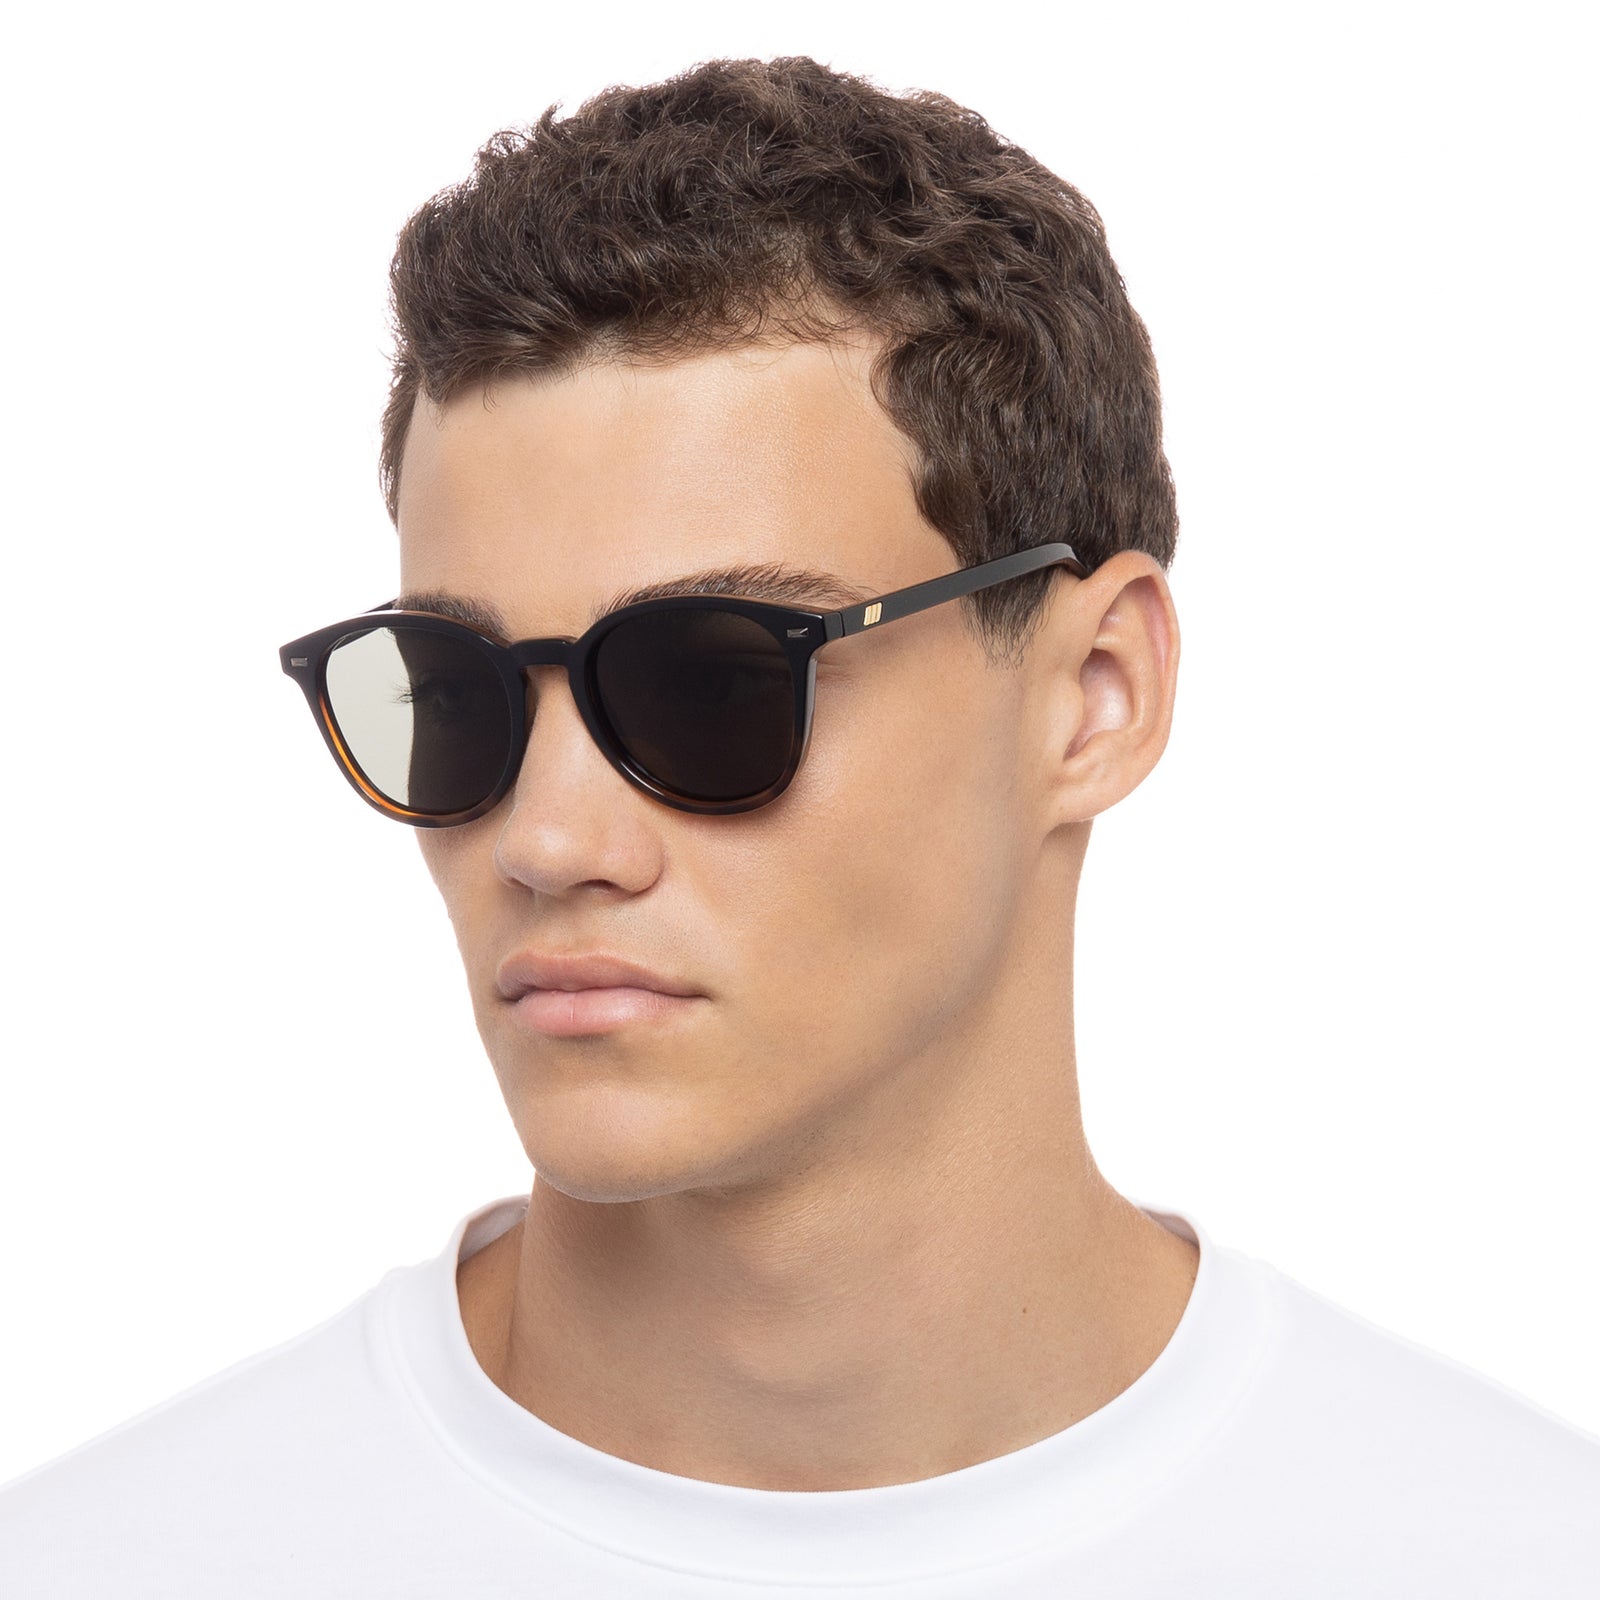 Vertrauen Bandwagon Black Tort | Sunglasses Round Uni-Sex Specs Le